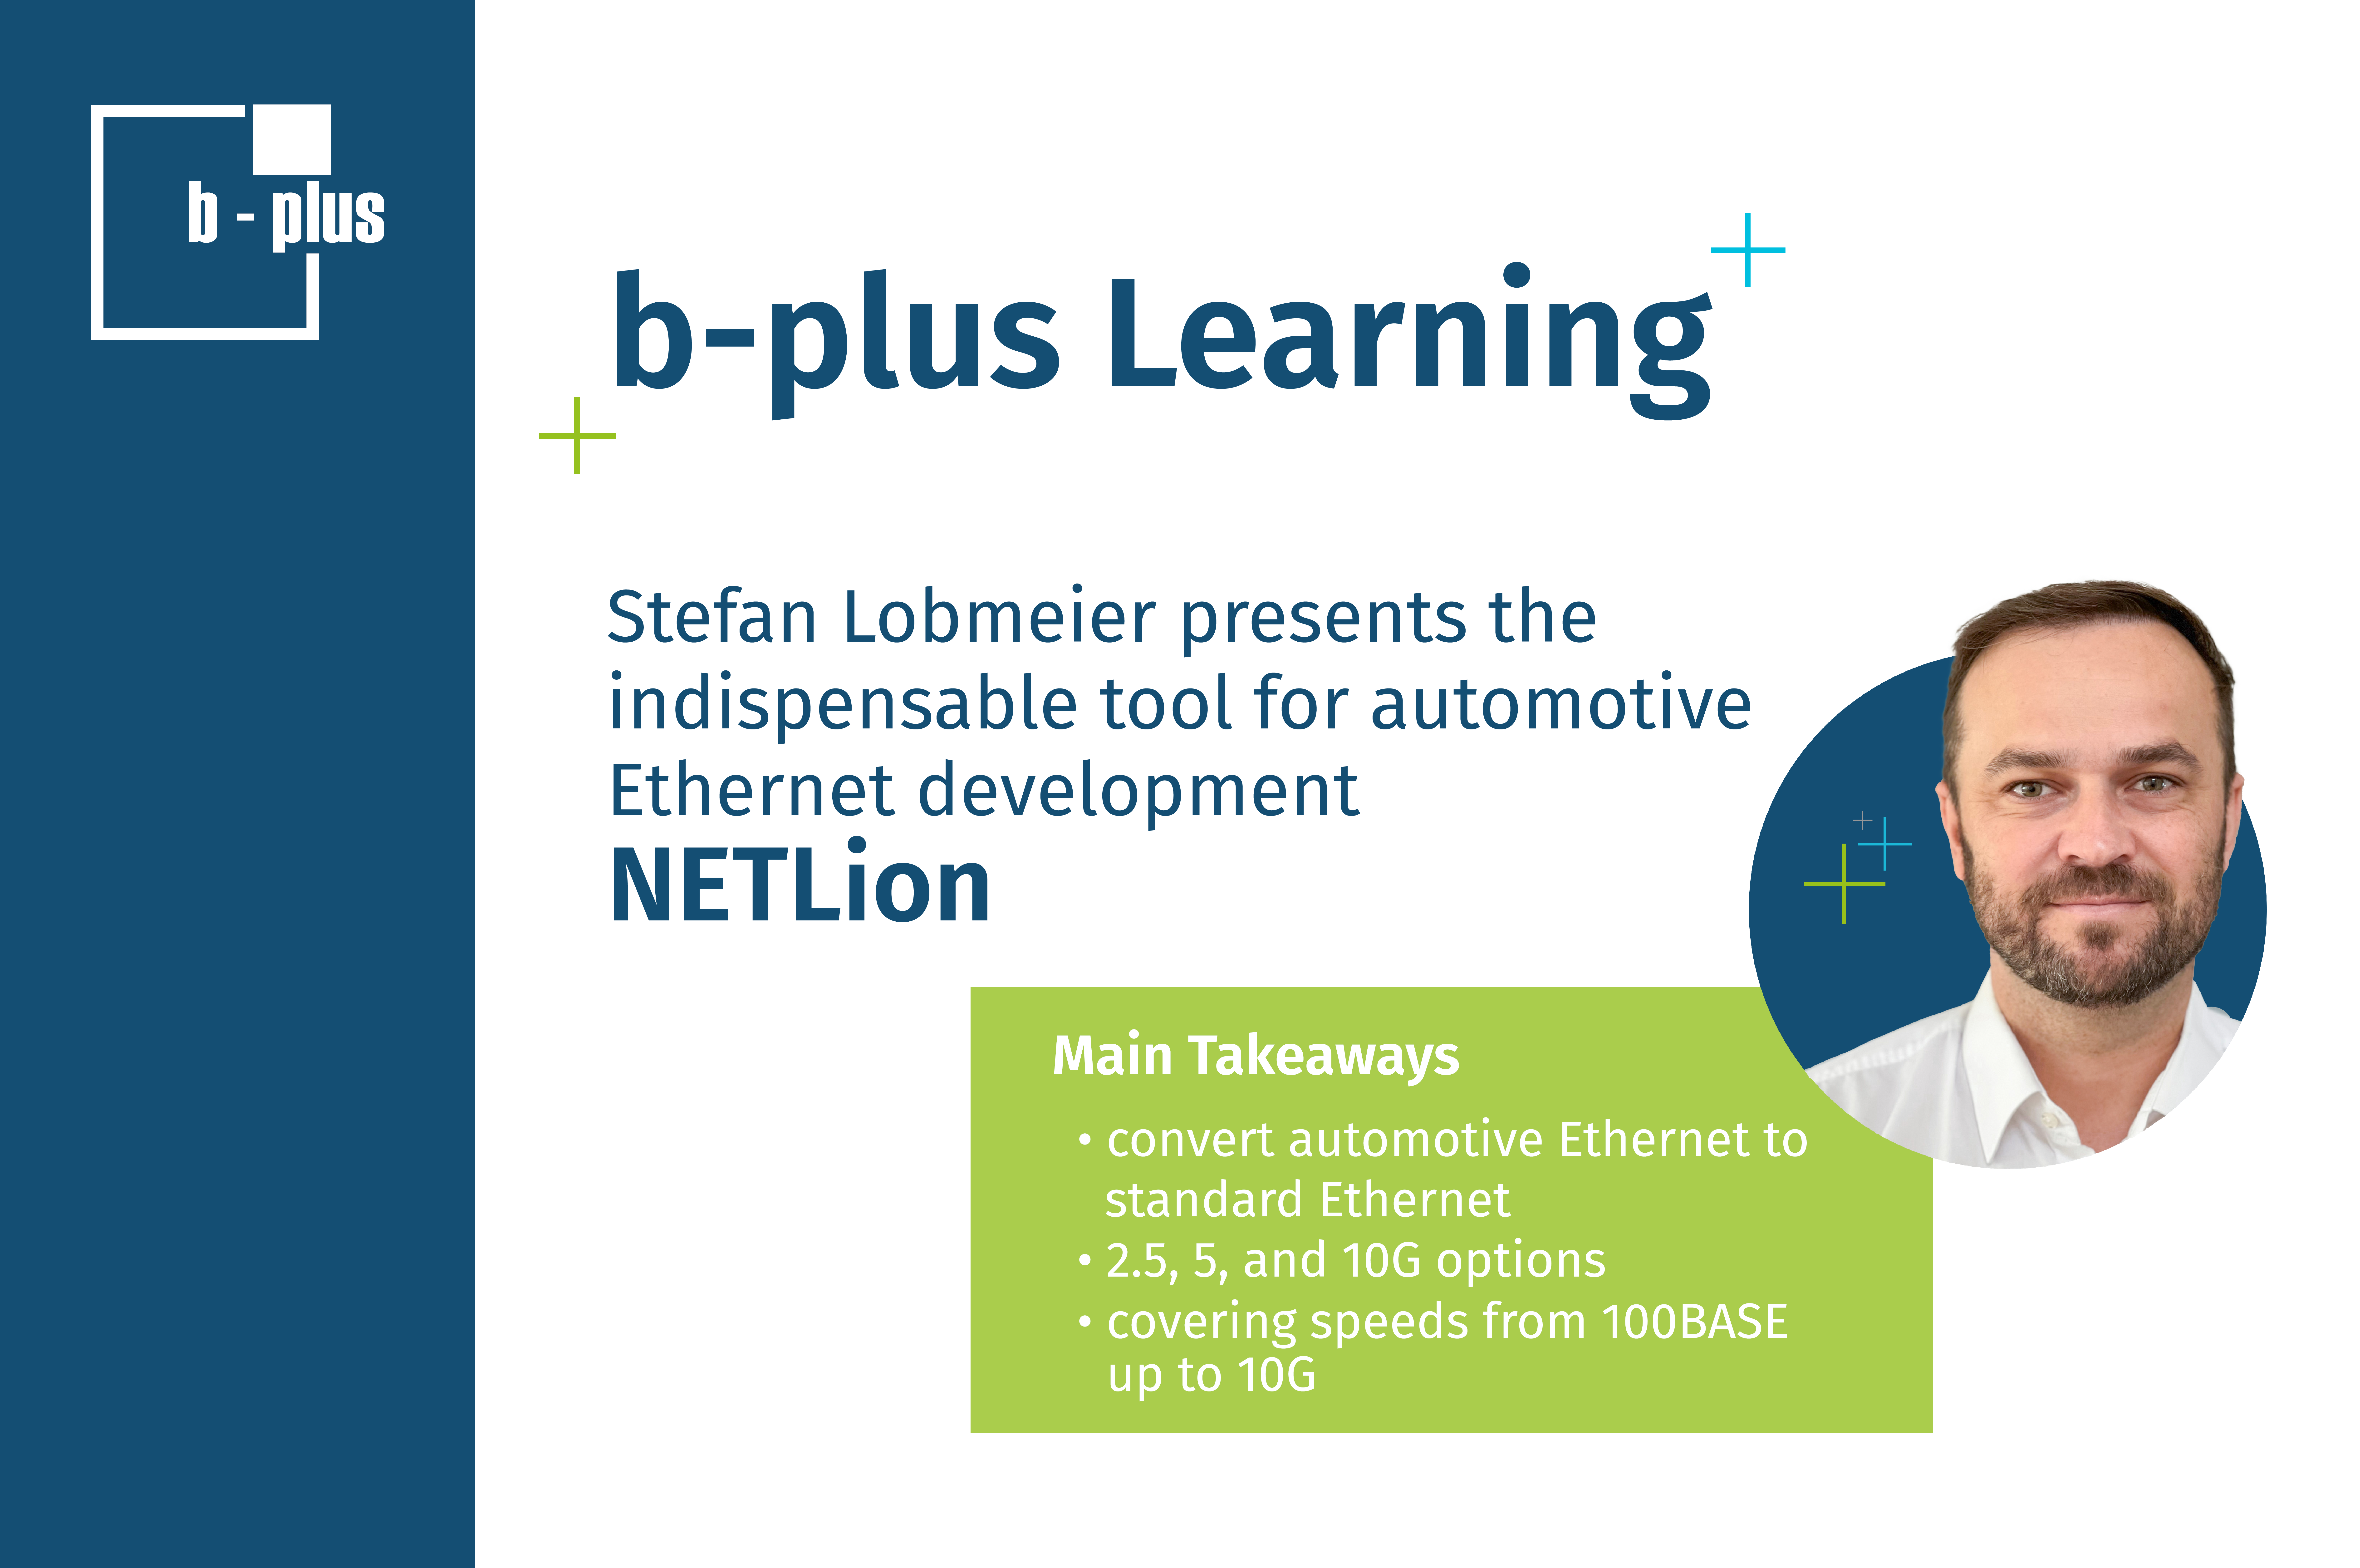 Media converter NETLion - The indispensable tool for automotive Ethernet development